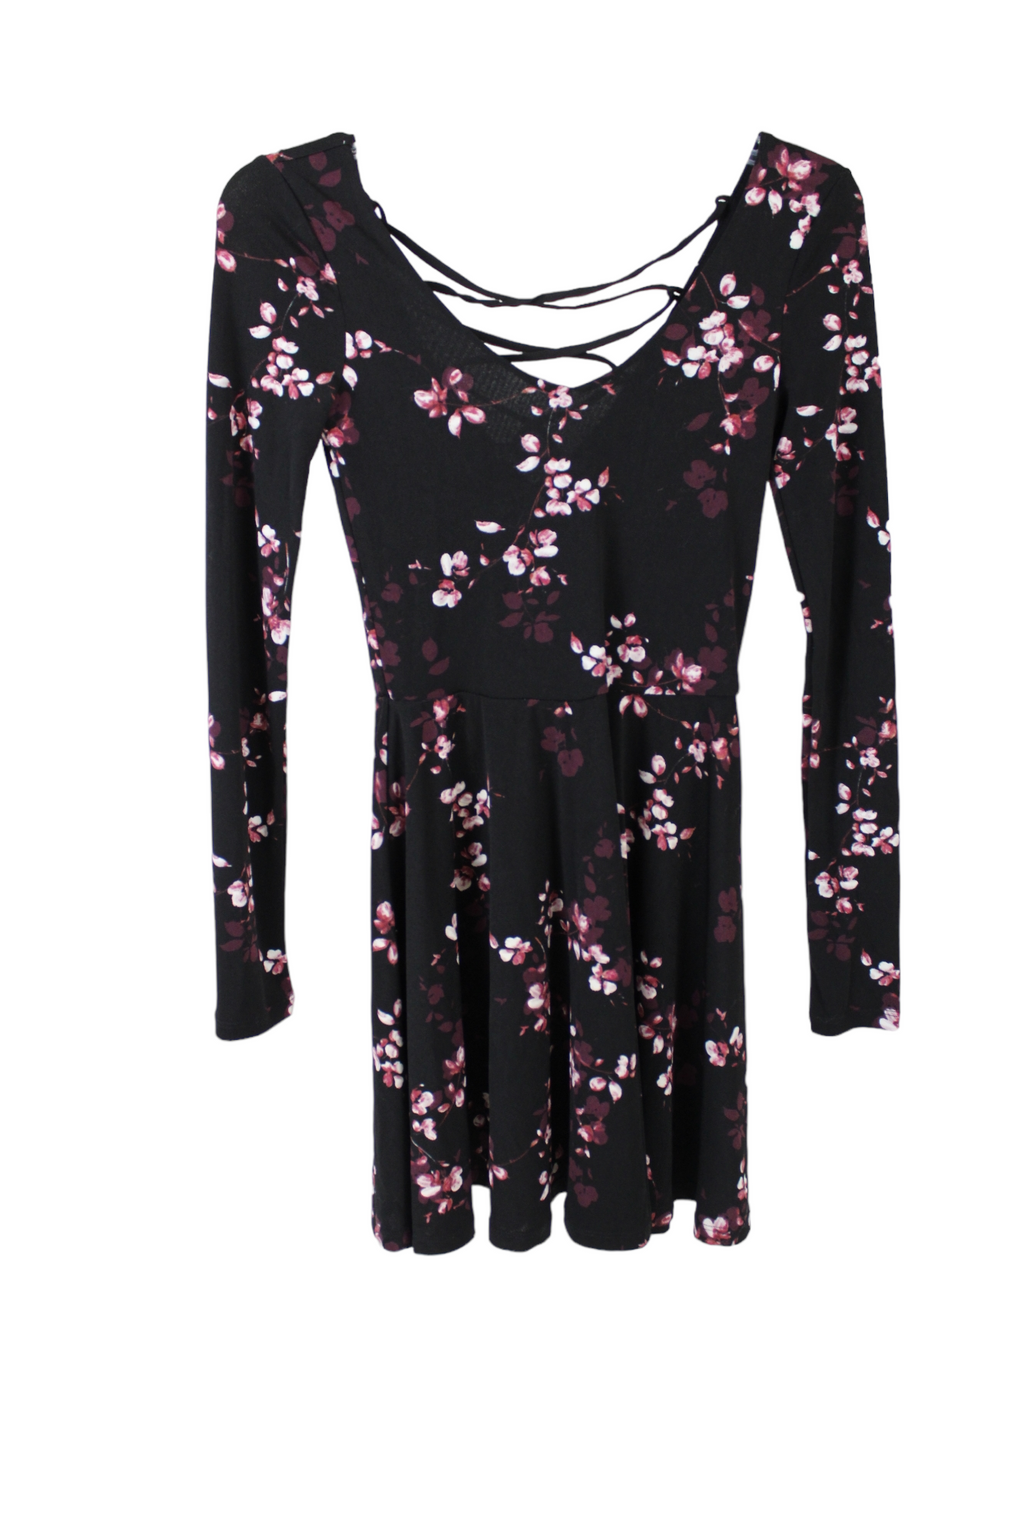 Aeropostale Black Floral Stretch Dress | XS